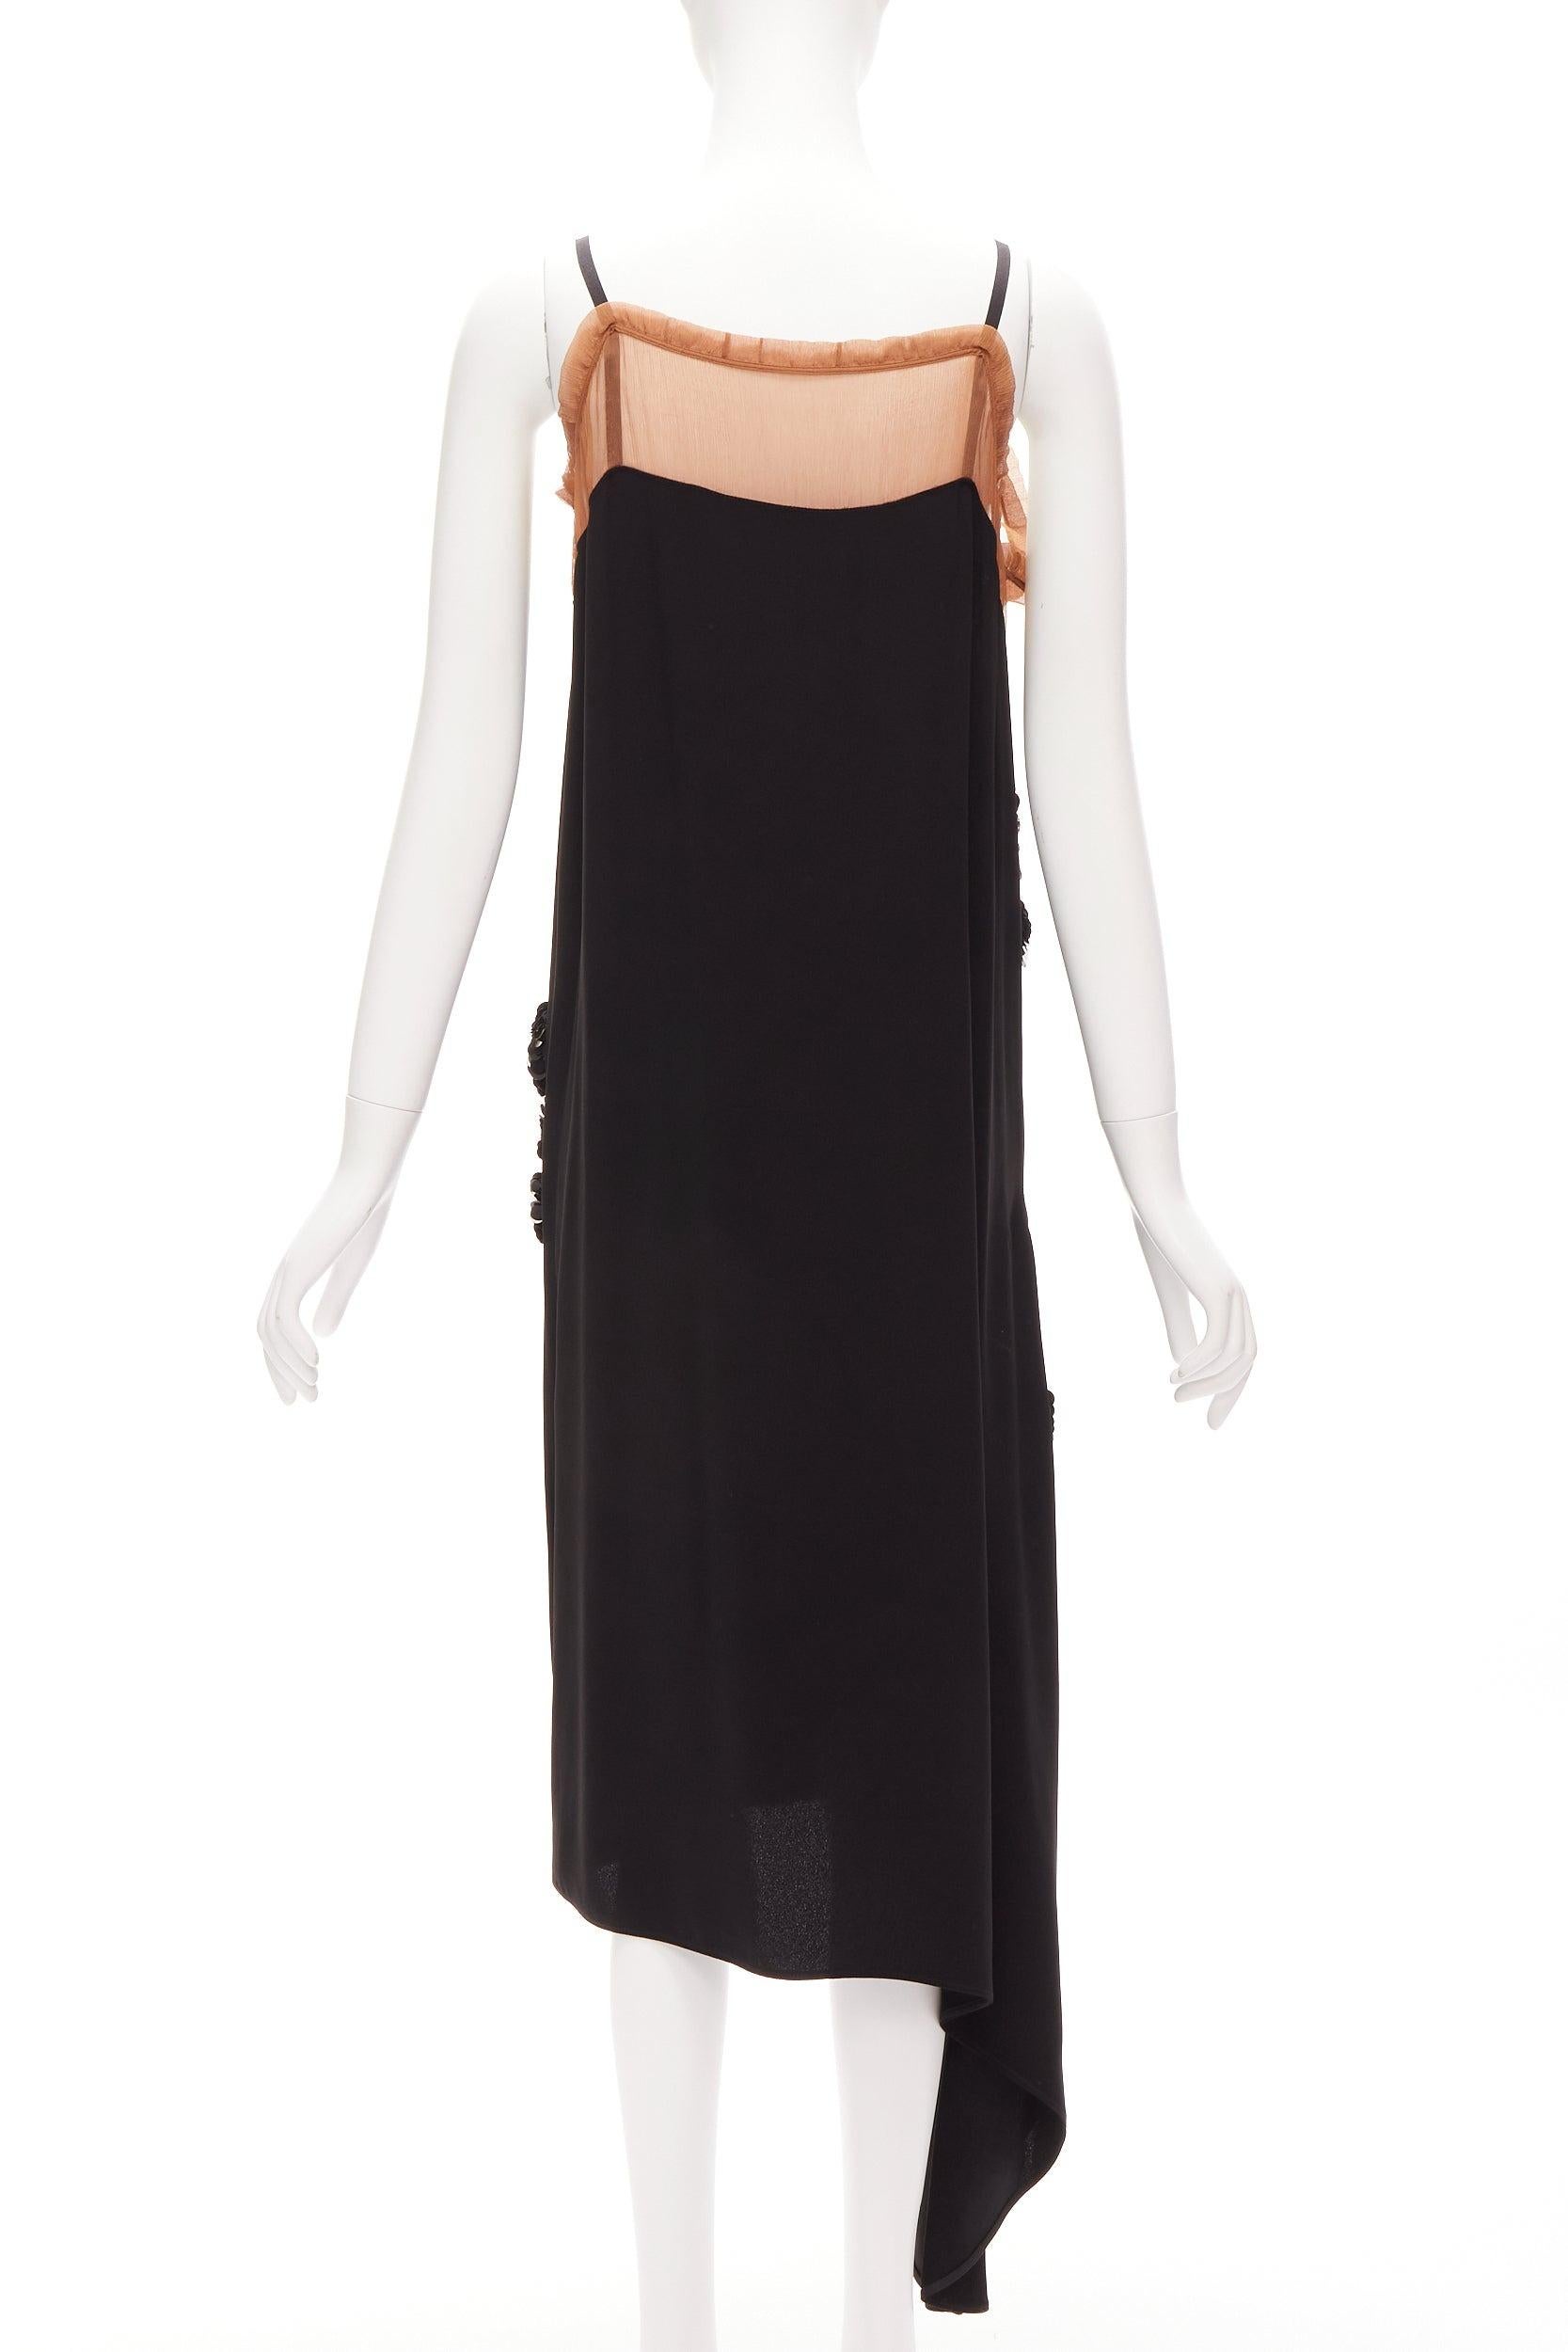 MARNI black floral sequins embellishment nude ruffle slip dress IT38 XS For Sale 1